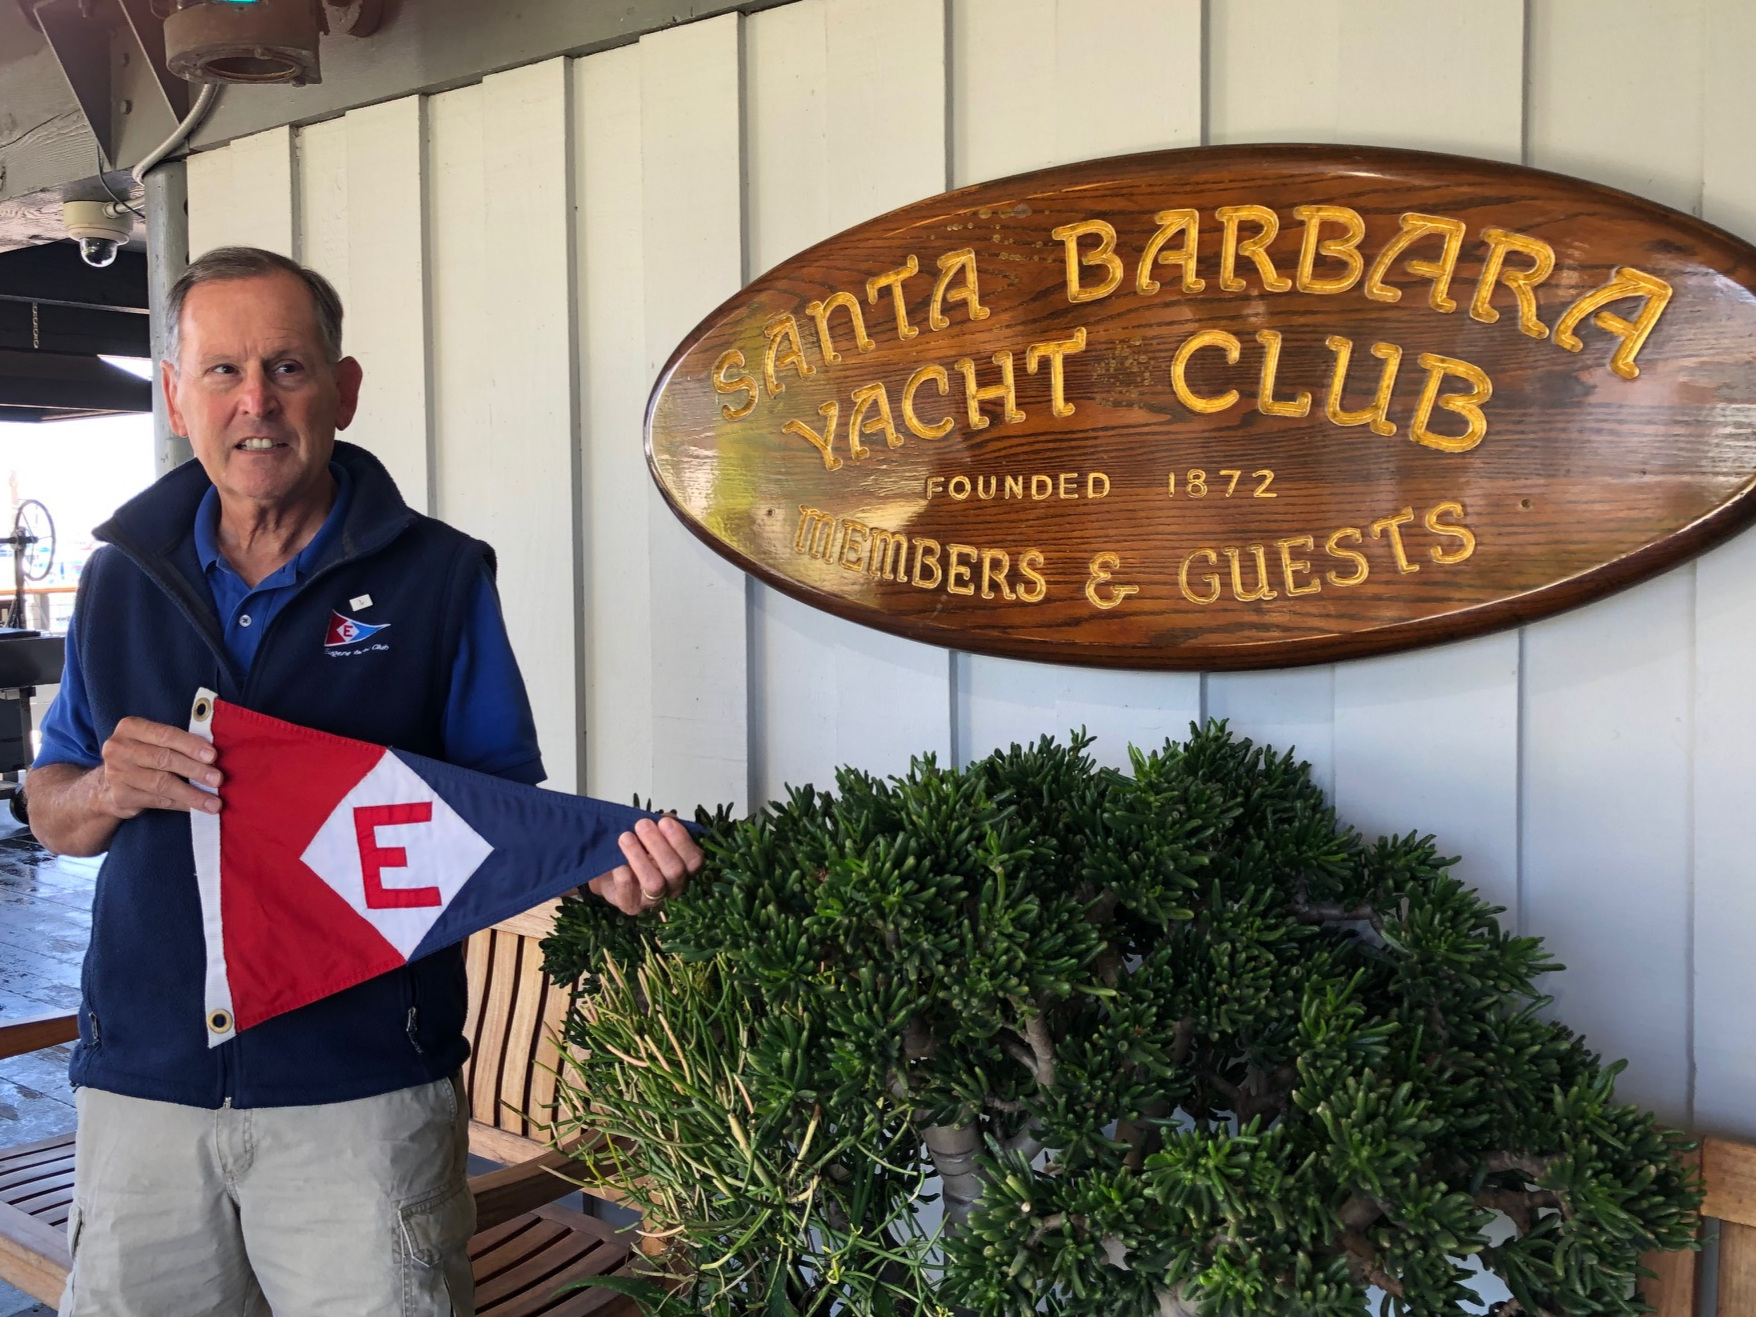  Gary before the burgee exchange with Santa Barbara Yacht Club in California 